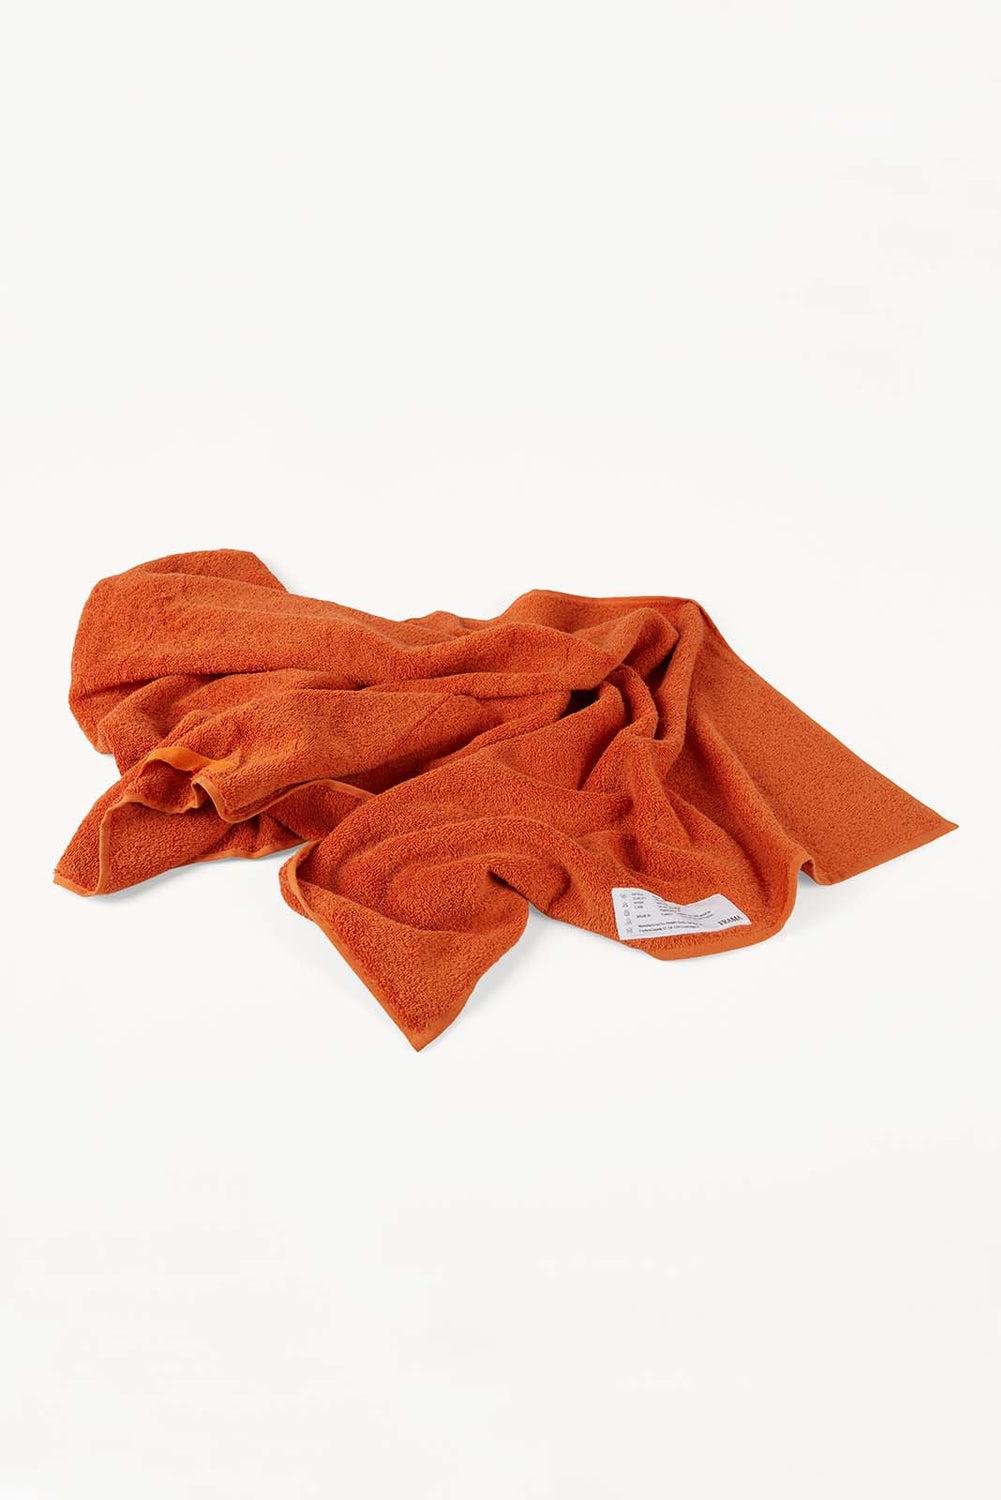 Body Towel Burnt Orange